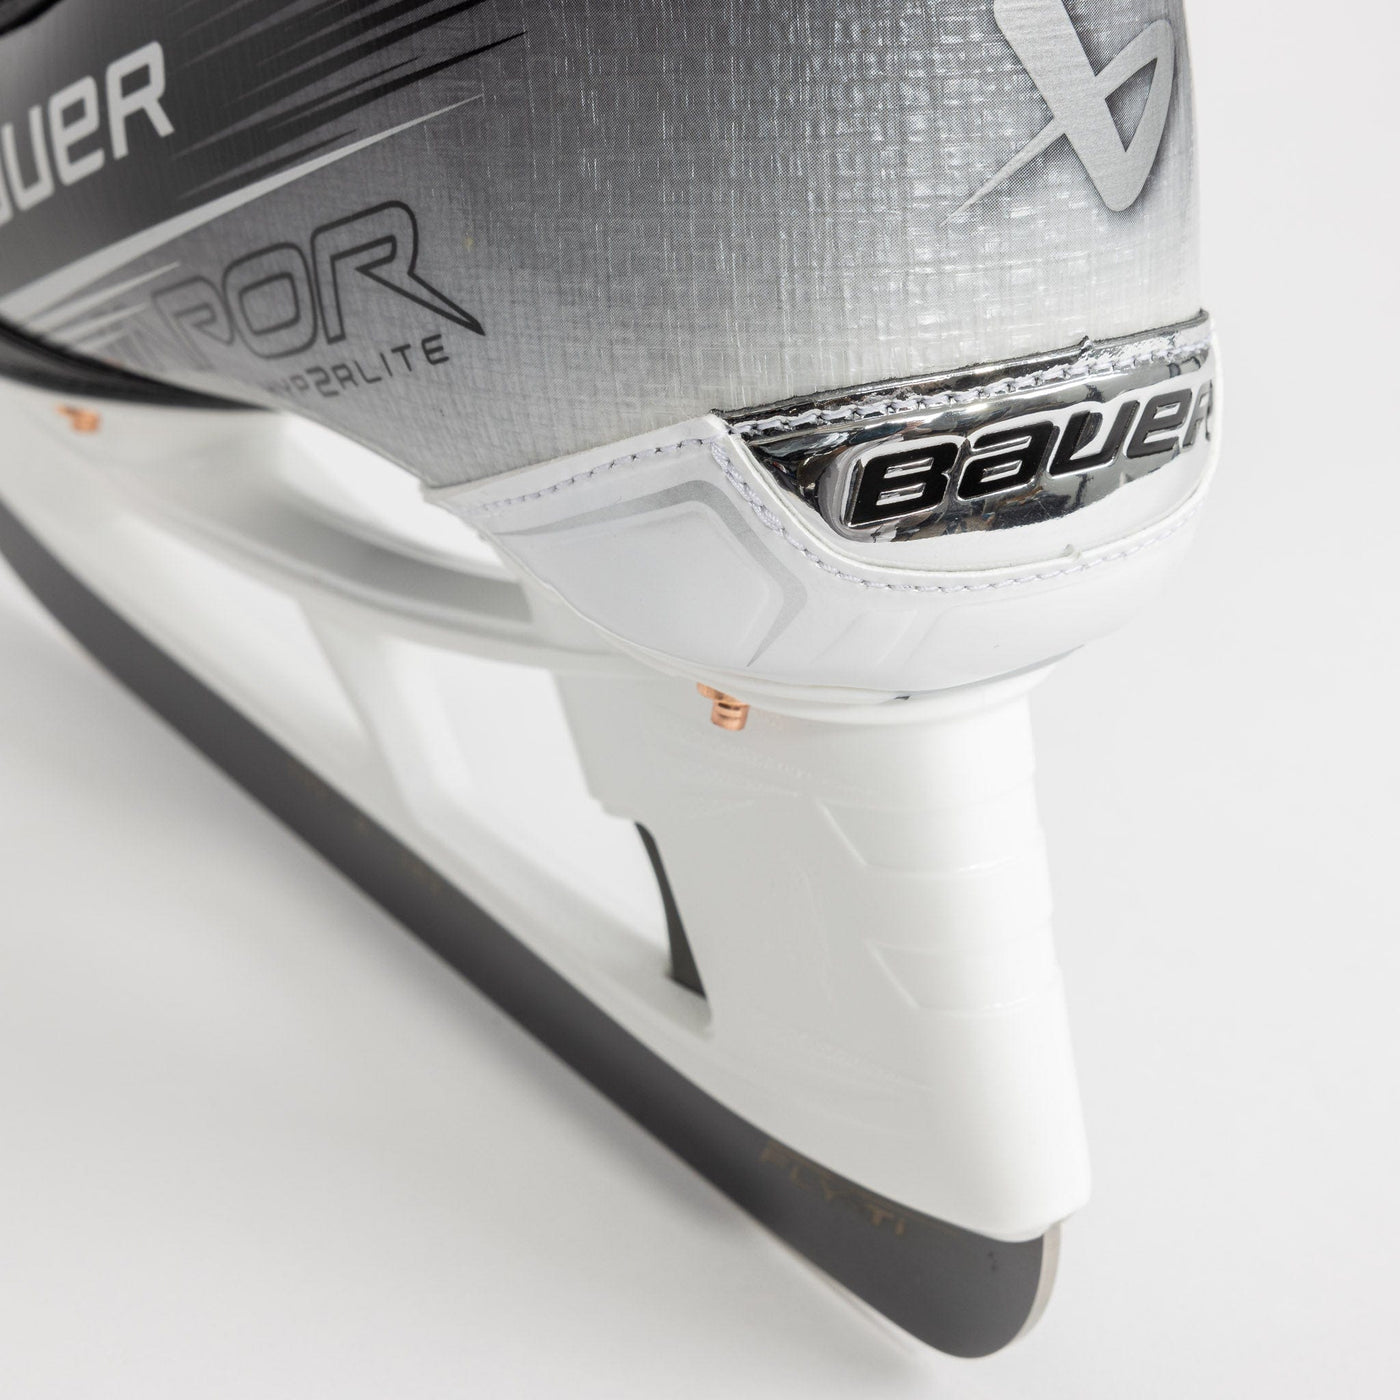 Bauer Vapor HyperLite2 Intermediate Hockey Skates - The Hockey Shop Source For Sports